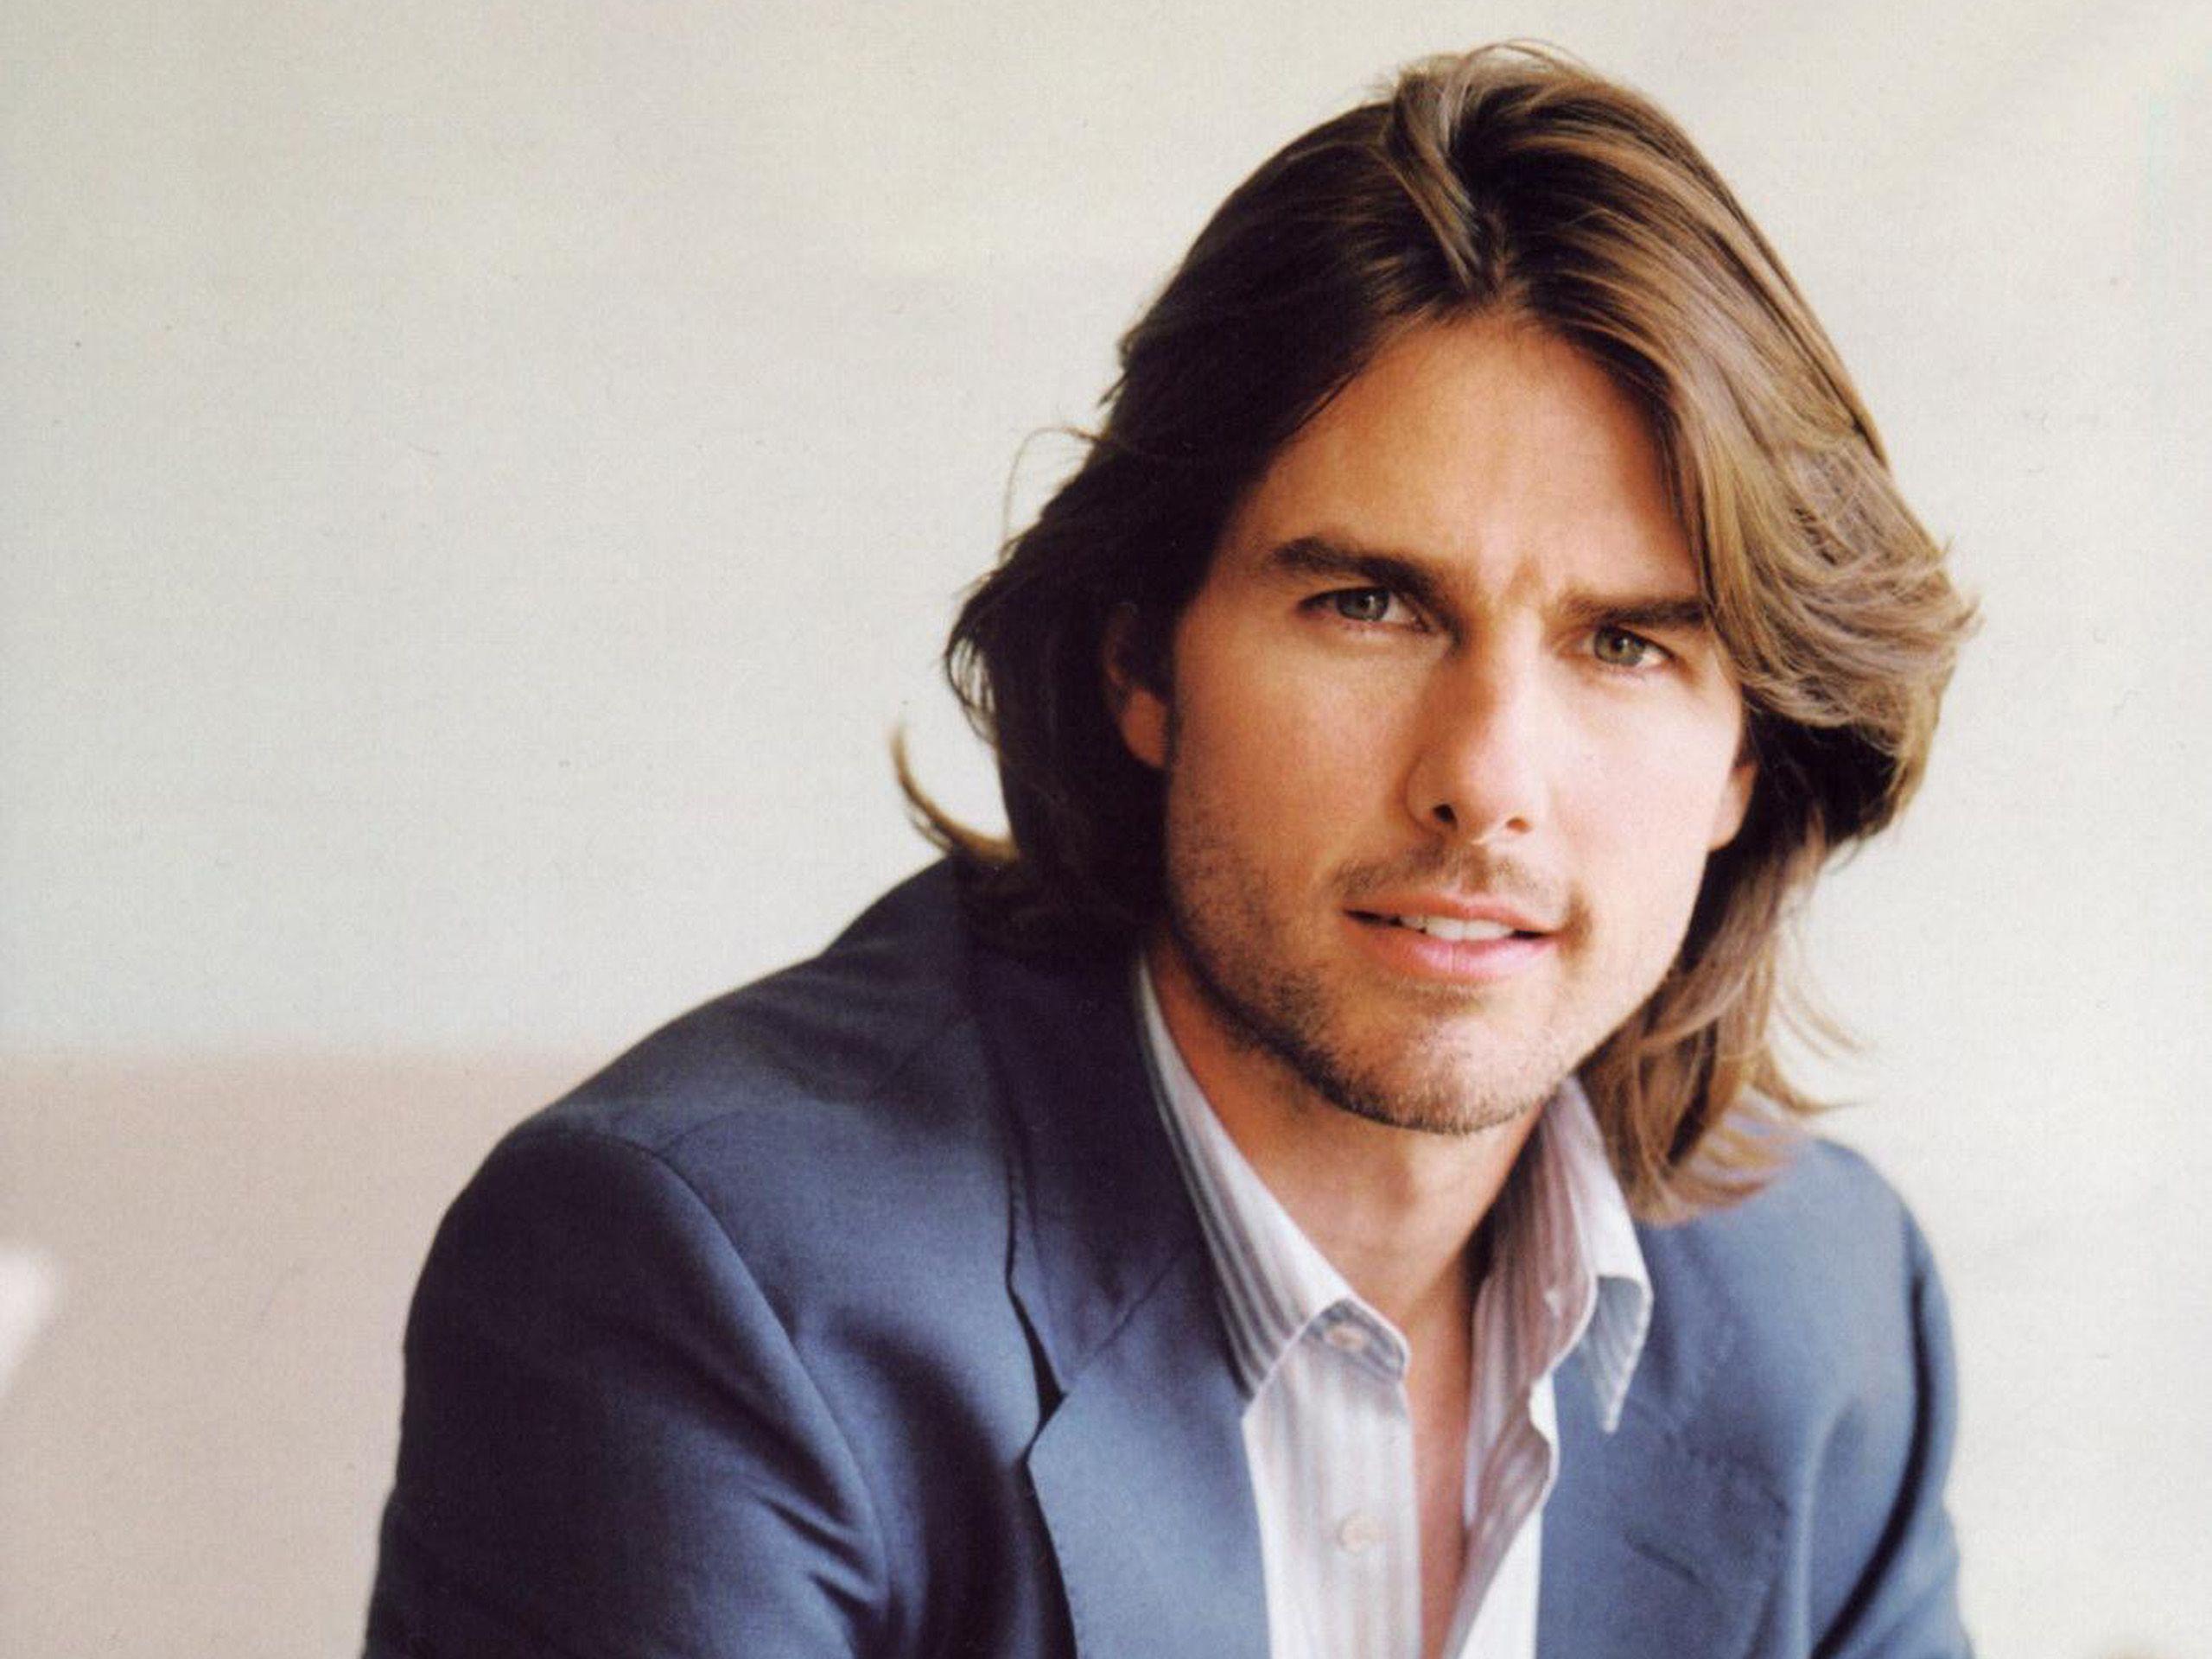 Tom Cruise Wallpaper: TOm Cruise. Tom cruise long hair, Long hair styles men, Tom cruise